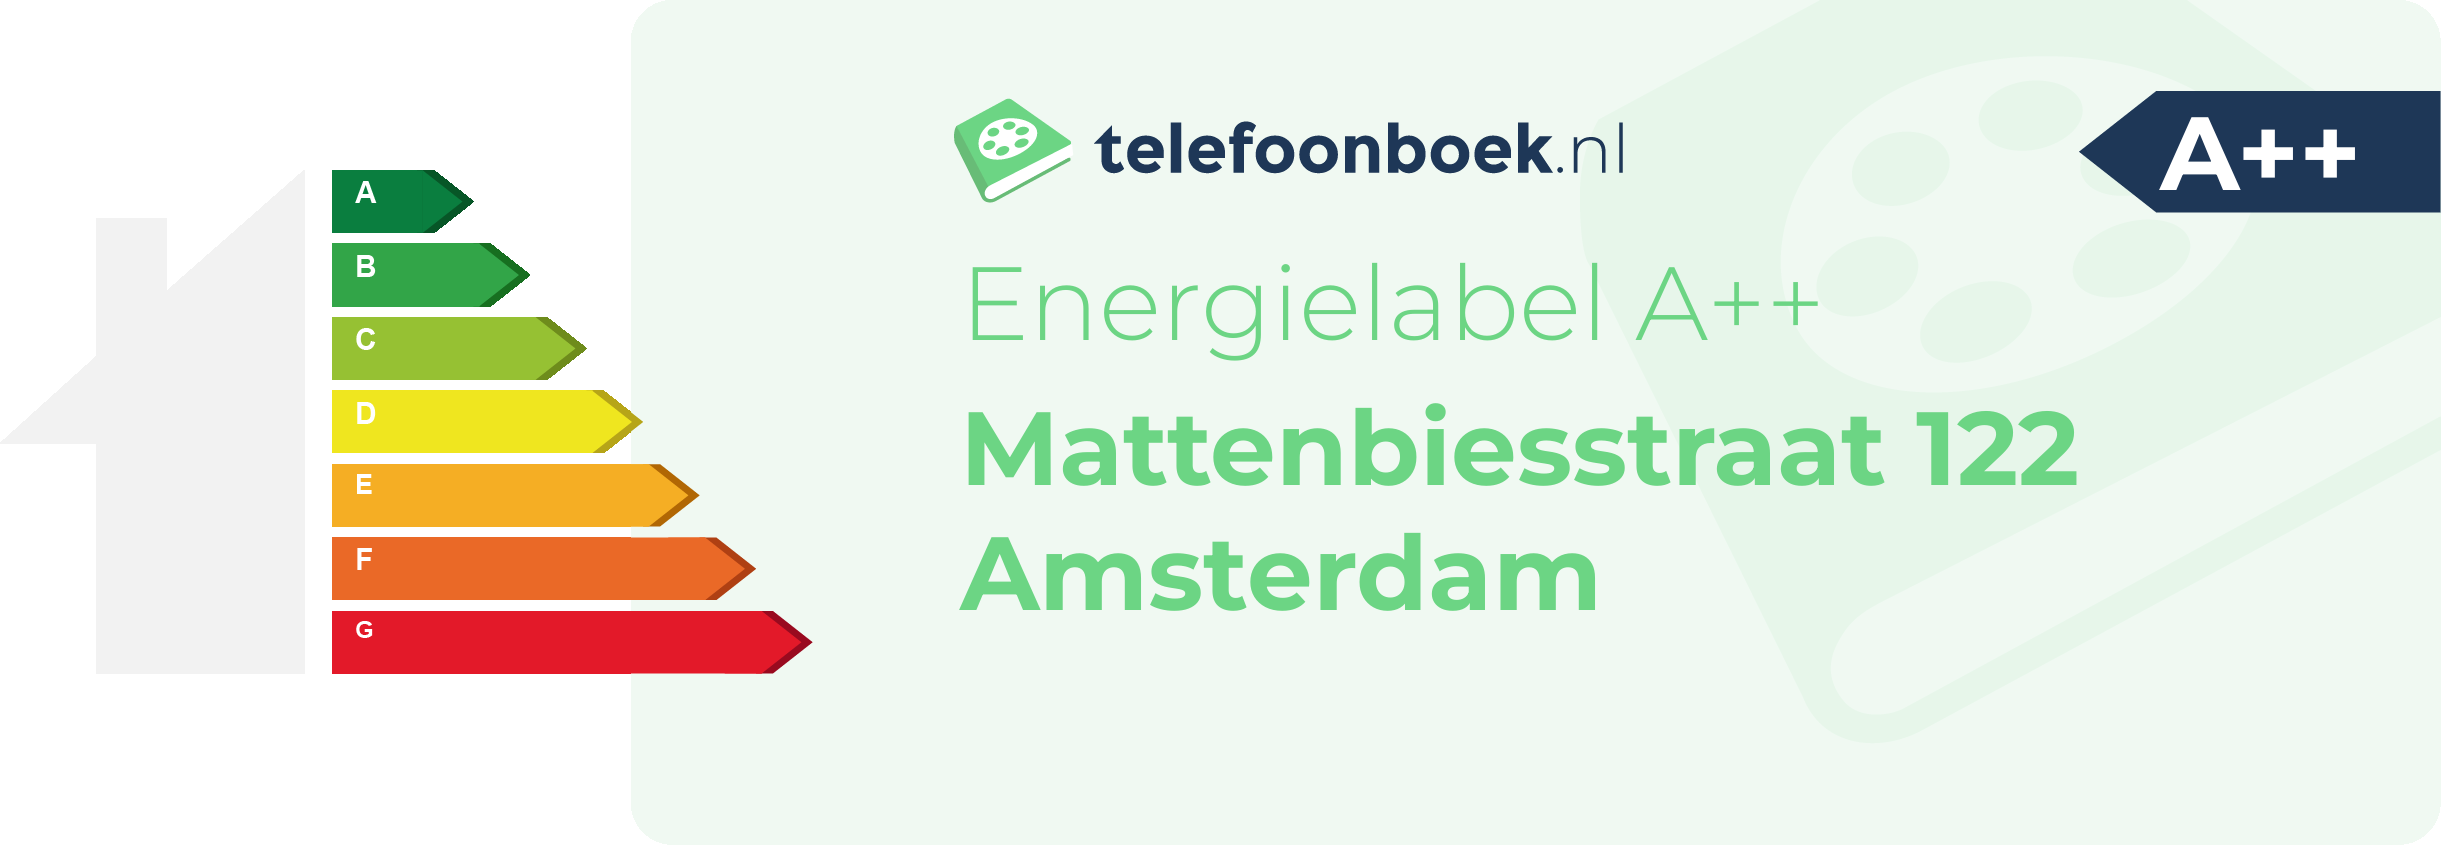 Energielabel Mattenbiesstraat 122 Amsterdam